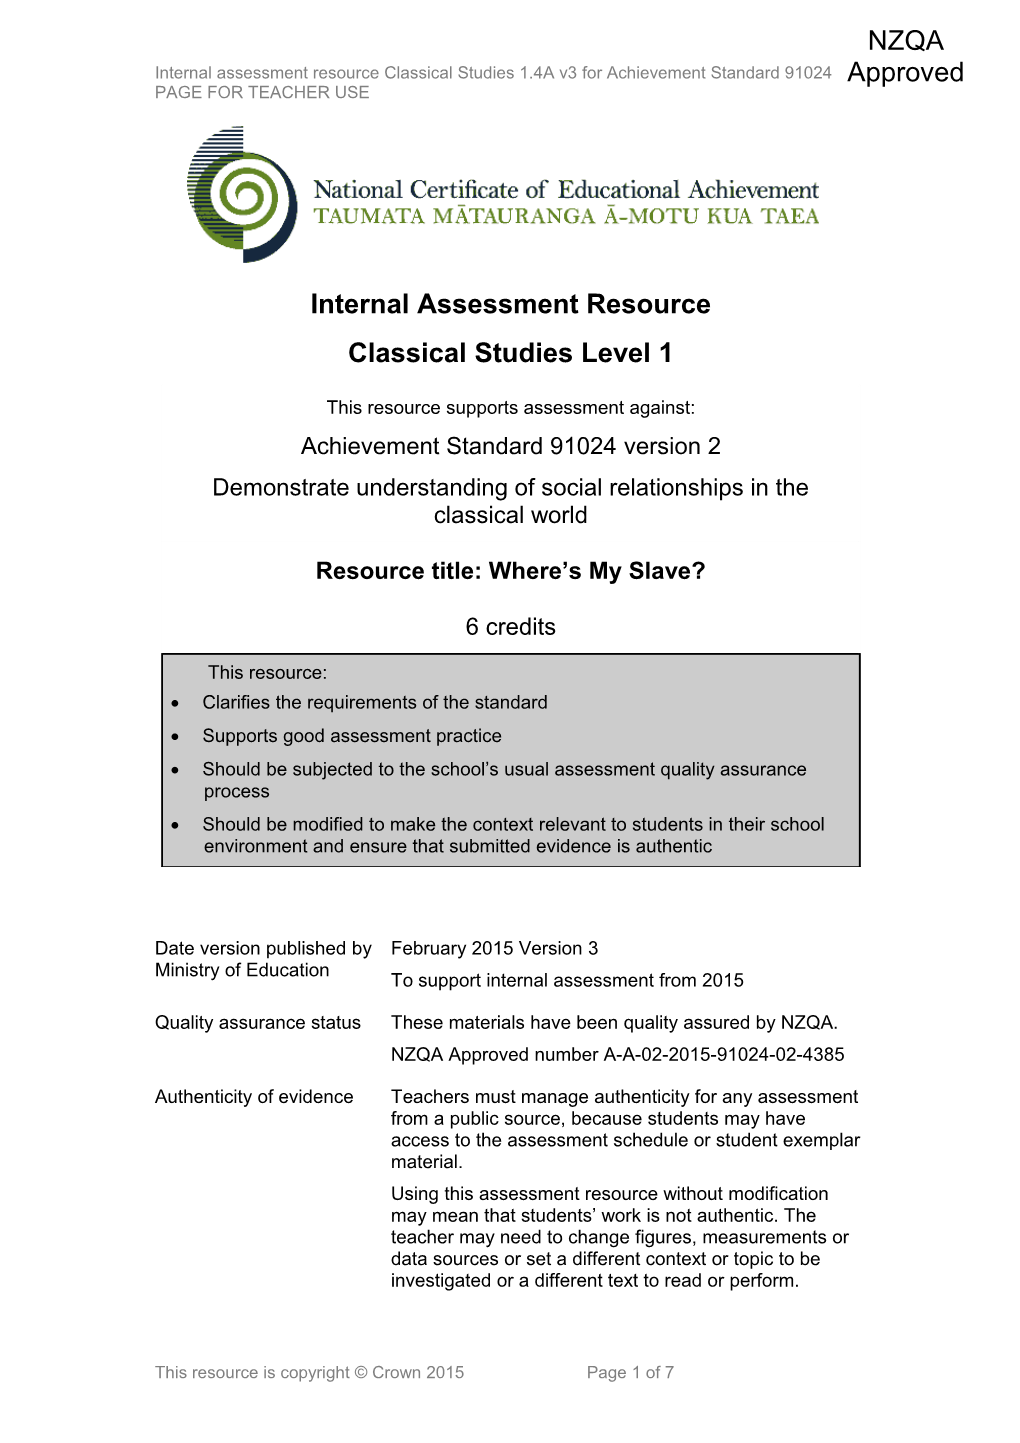 Level 1 Classical Studies Internal Assessment Resource